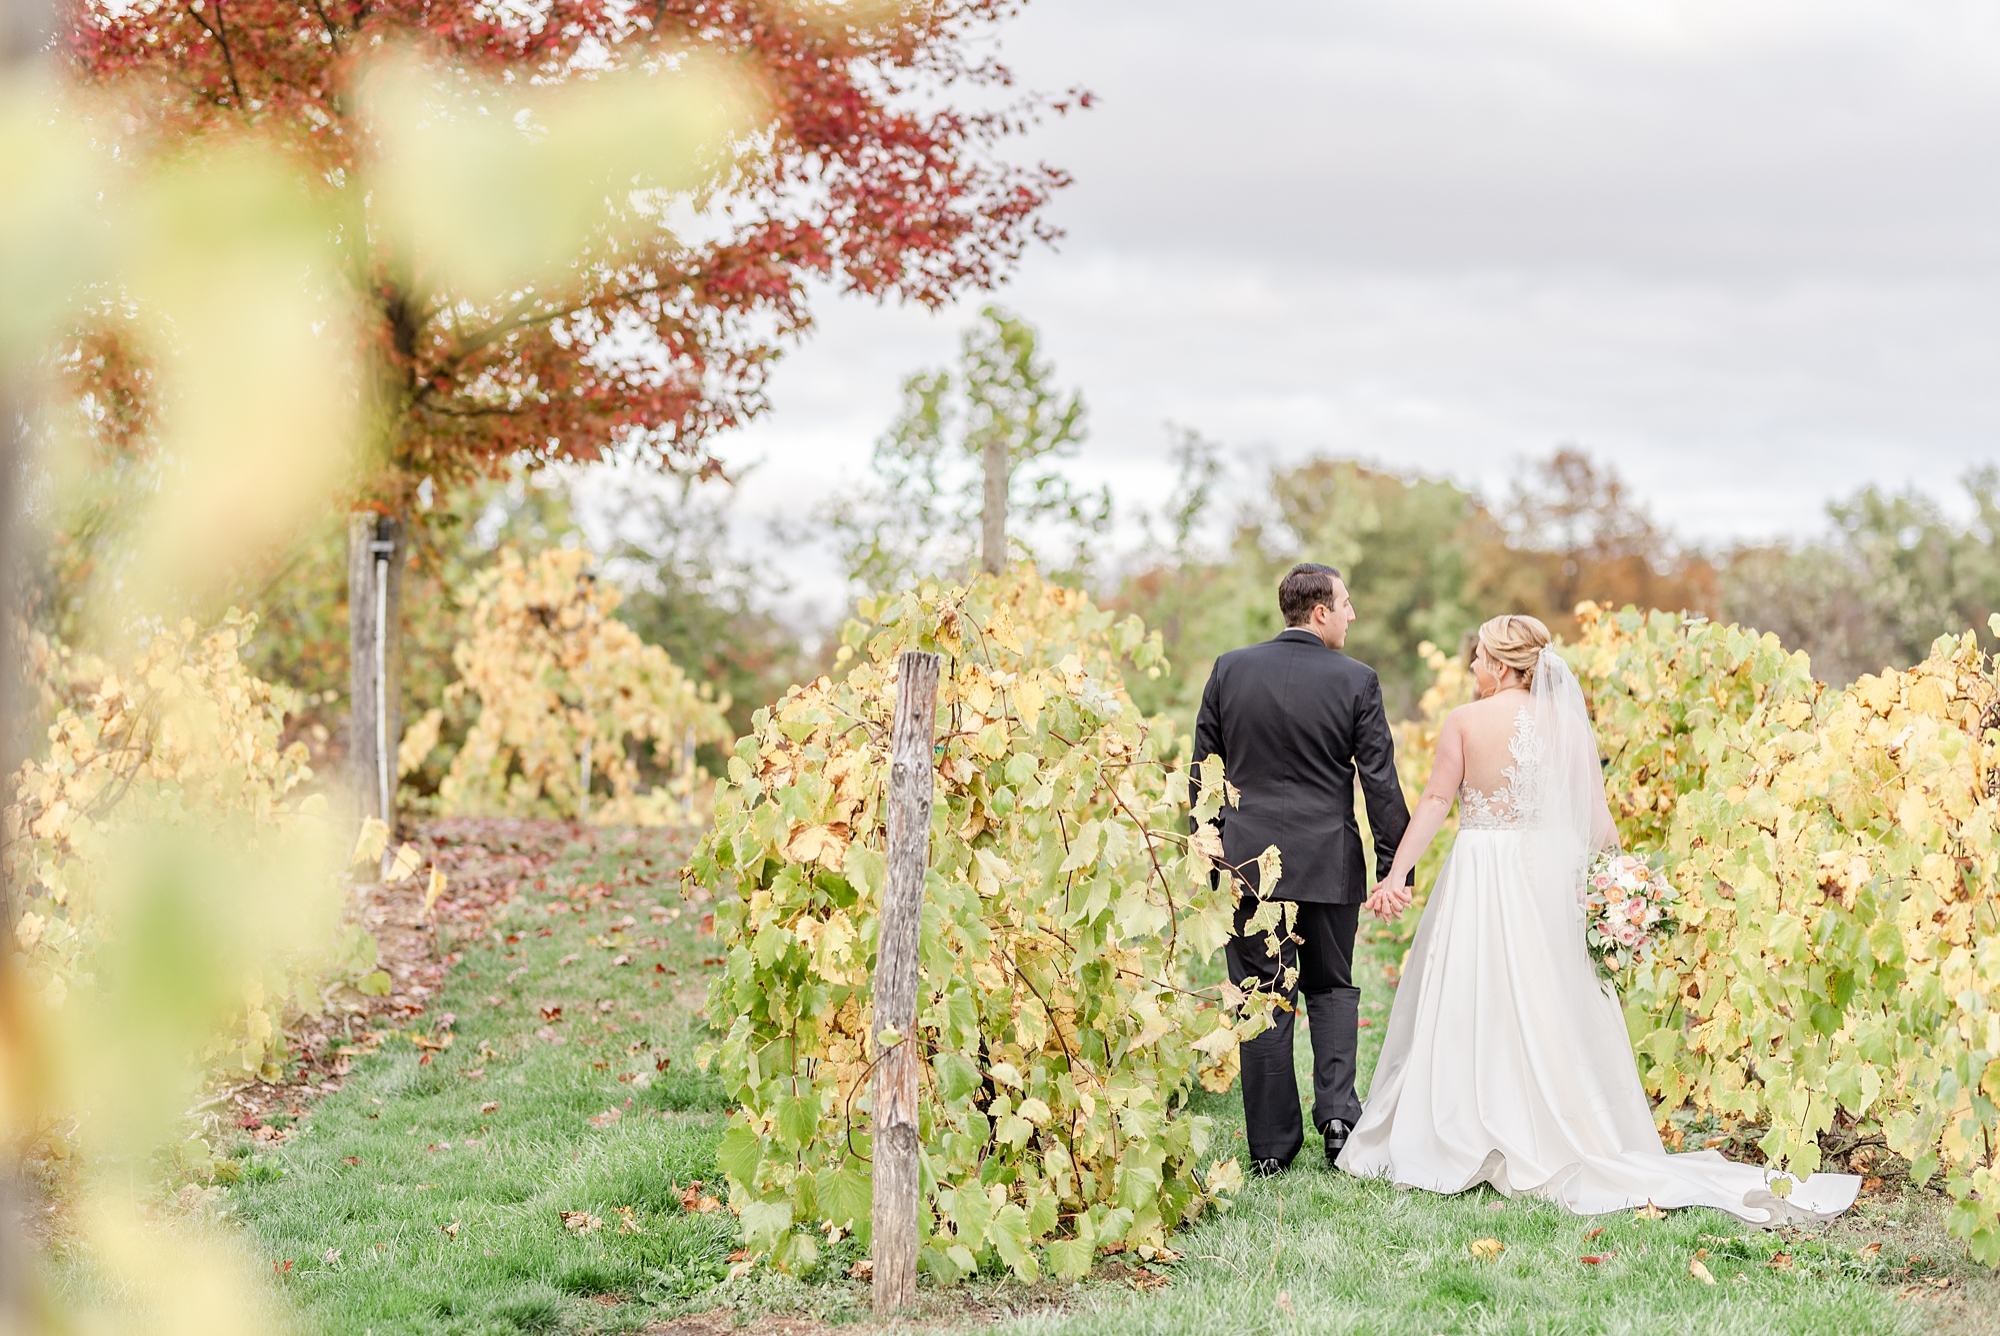 newlyweds walk through vines in Ohio